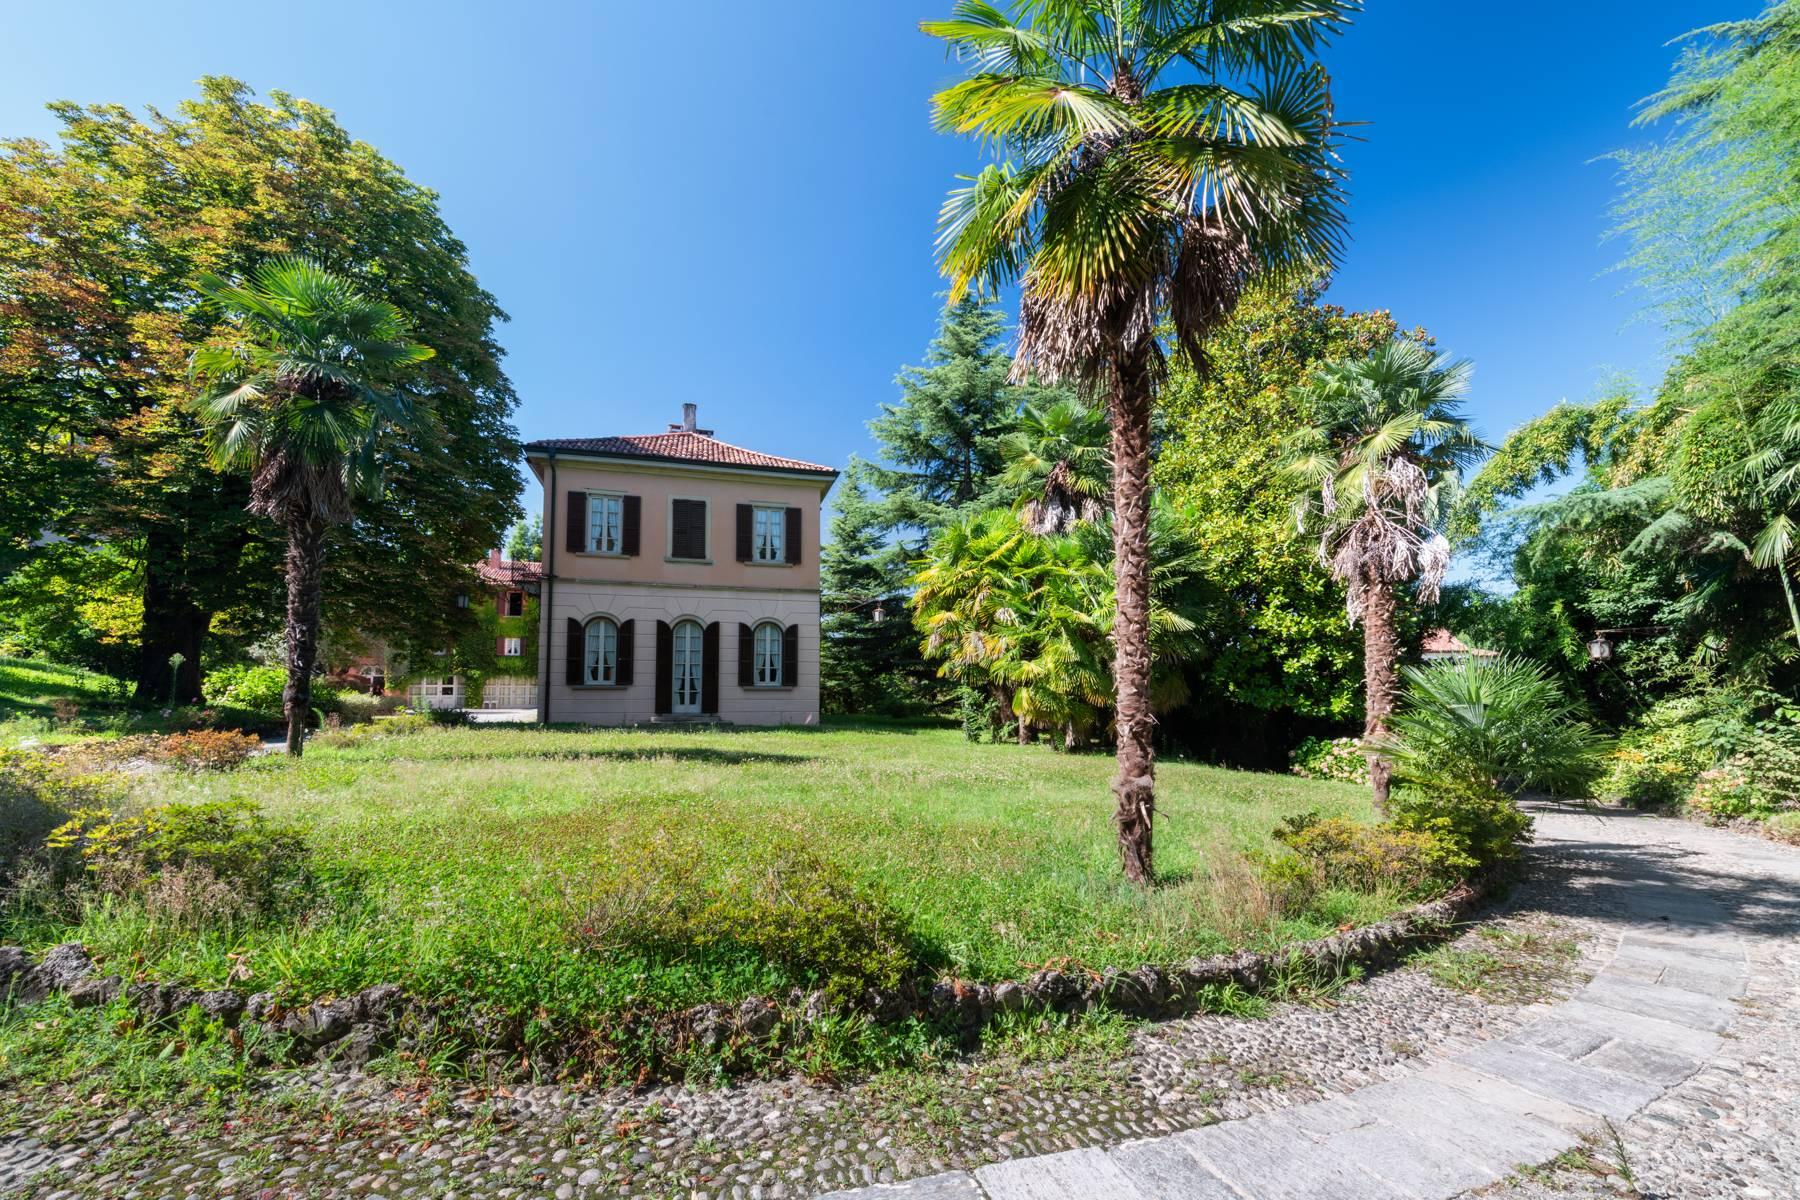 Period villa with park and swimming pool in Brianza - 19